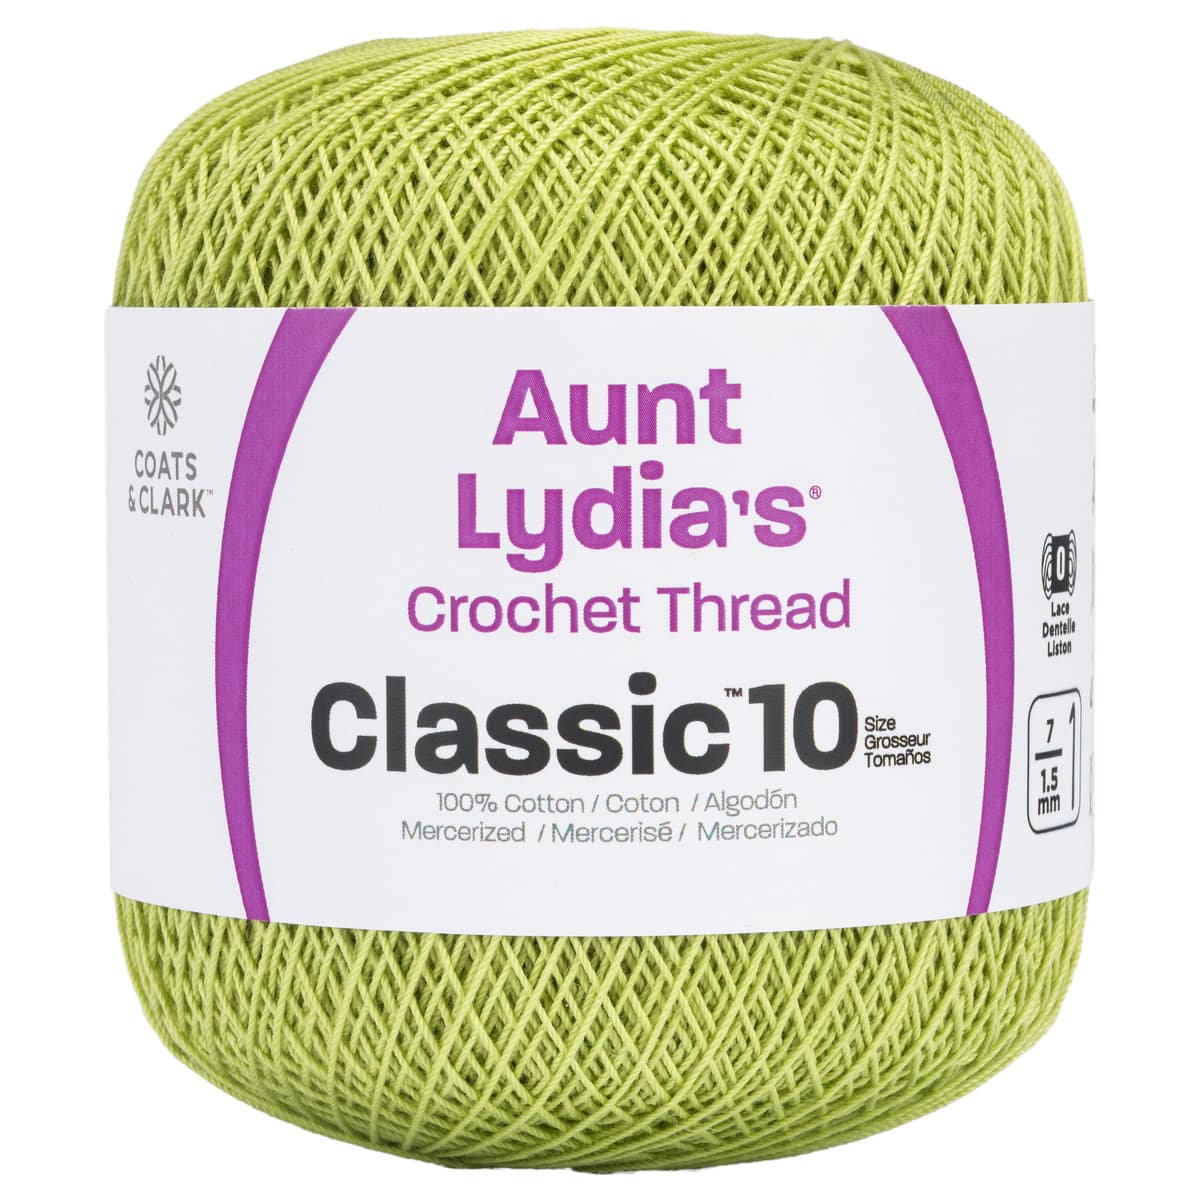 Coats And Clark Aunt Lydia's Classic Crochet Thread - Size 10